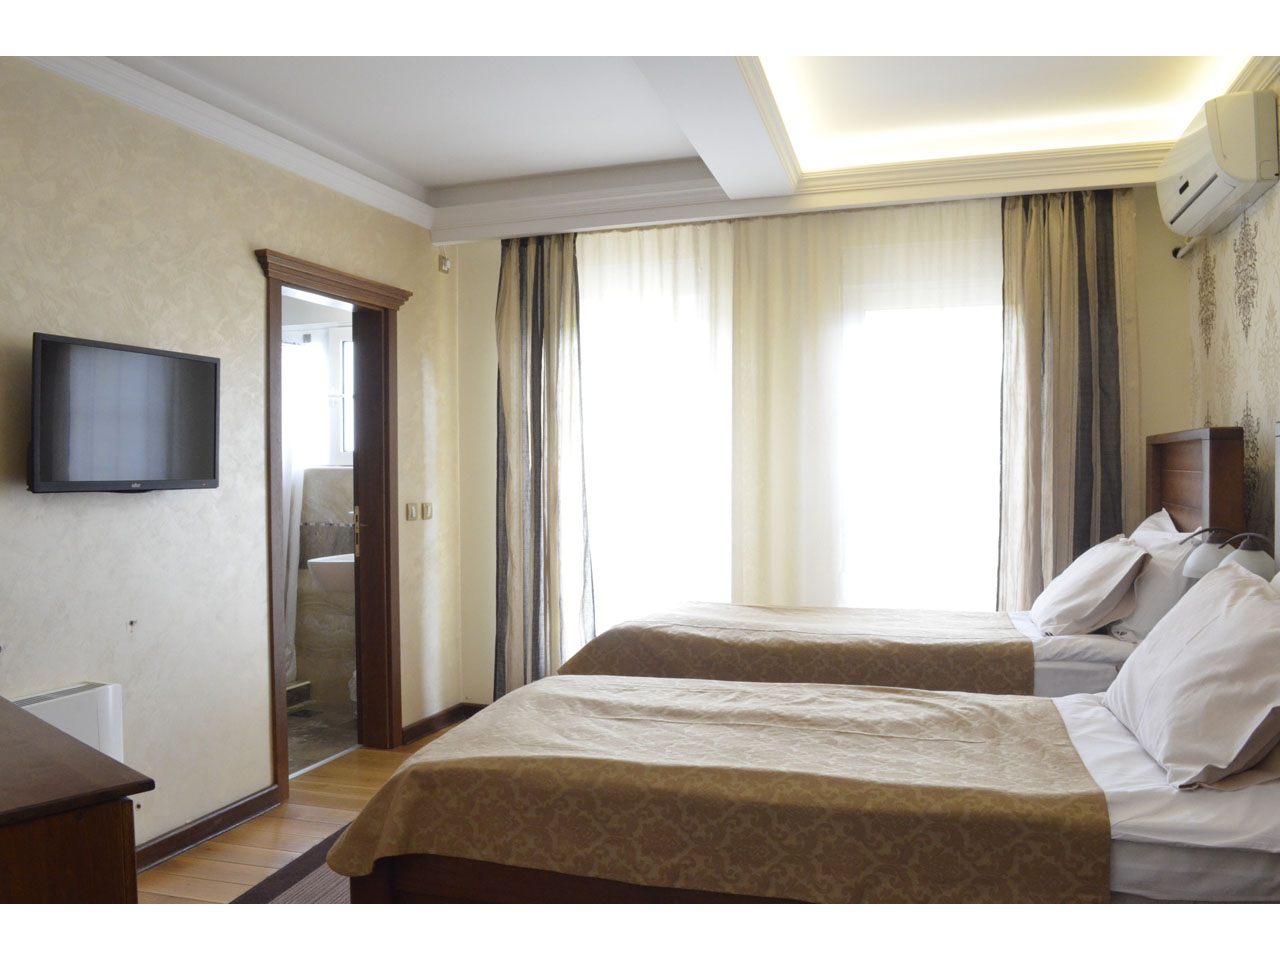 RESTAURANT JOVANJE Accommodation, room renting Belgrade - Photo 6